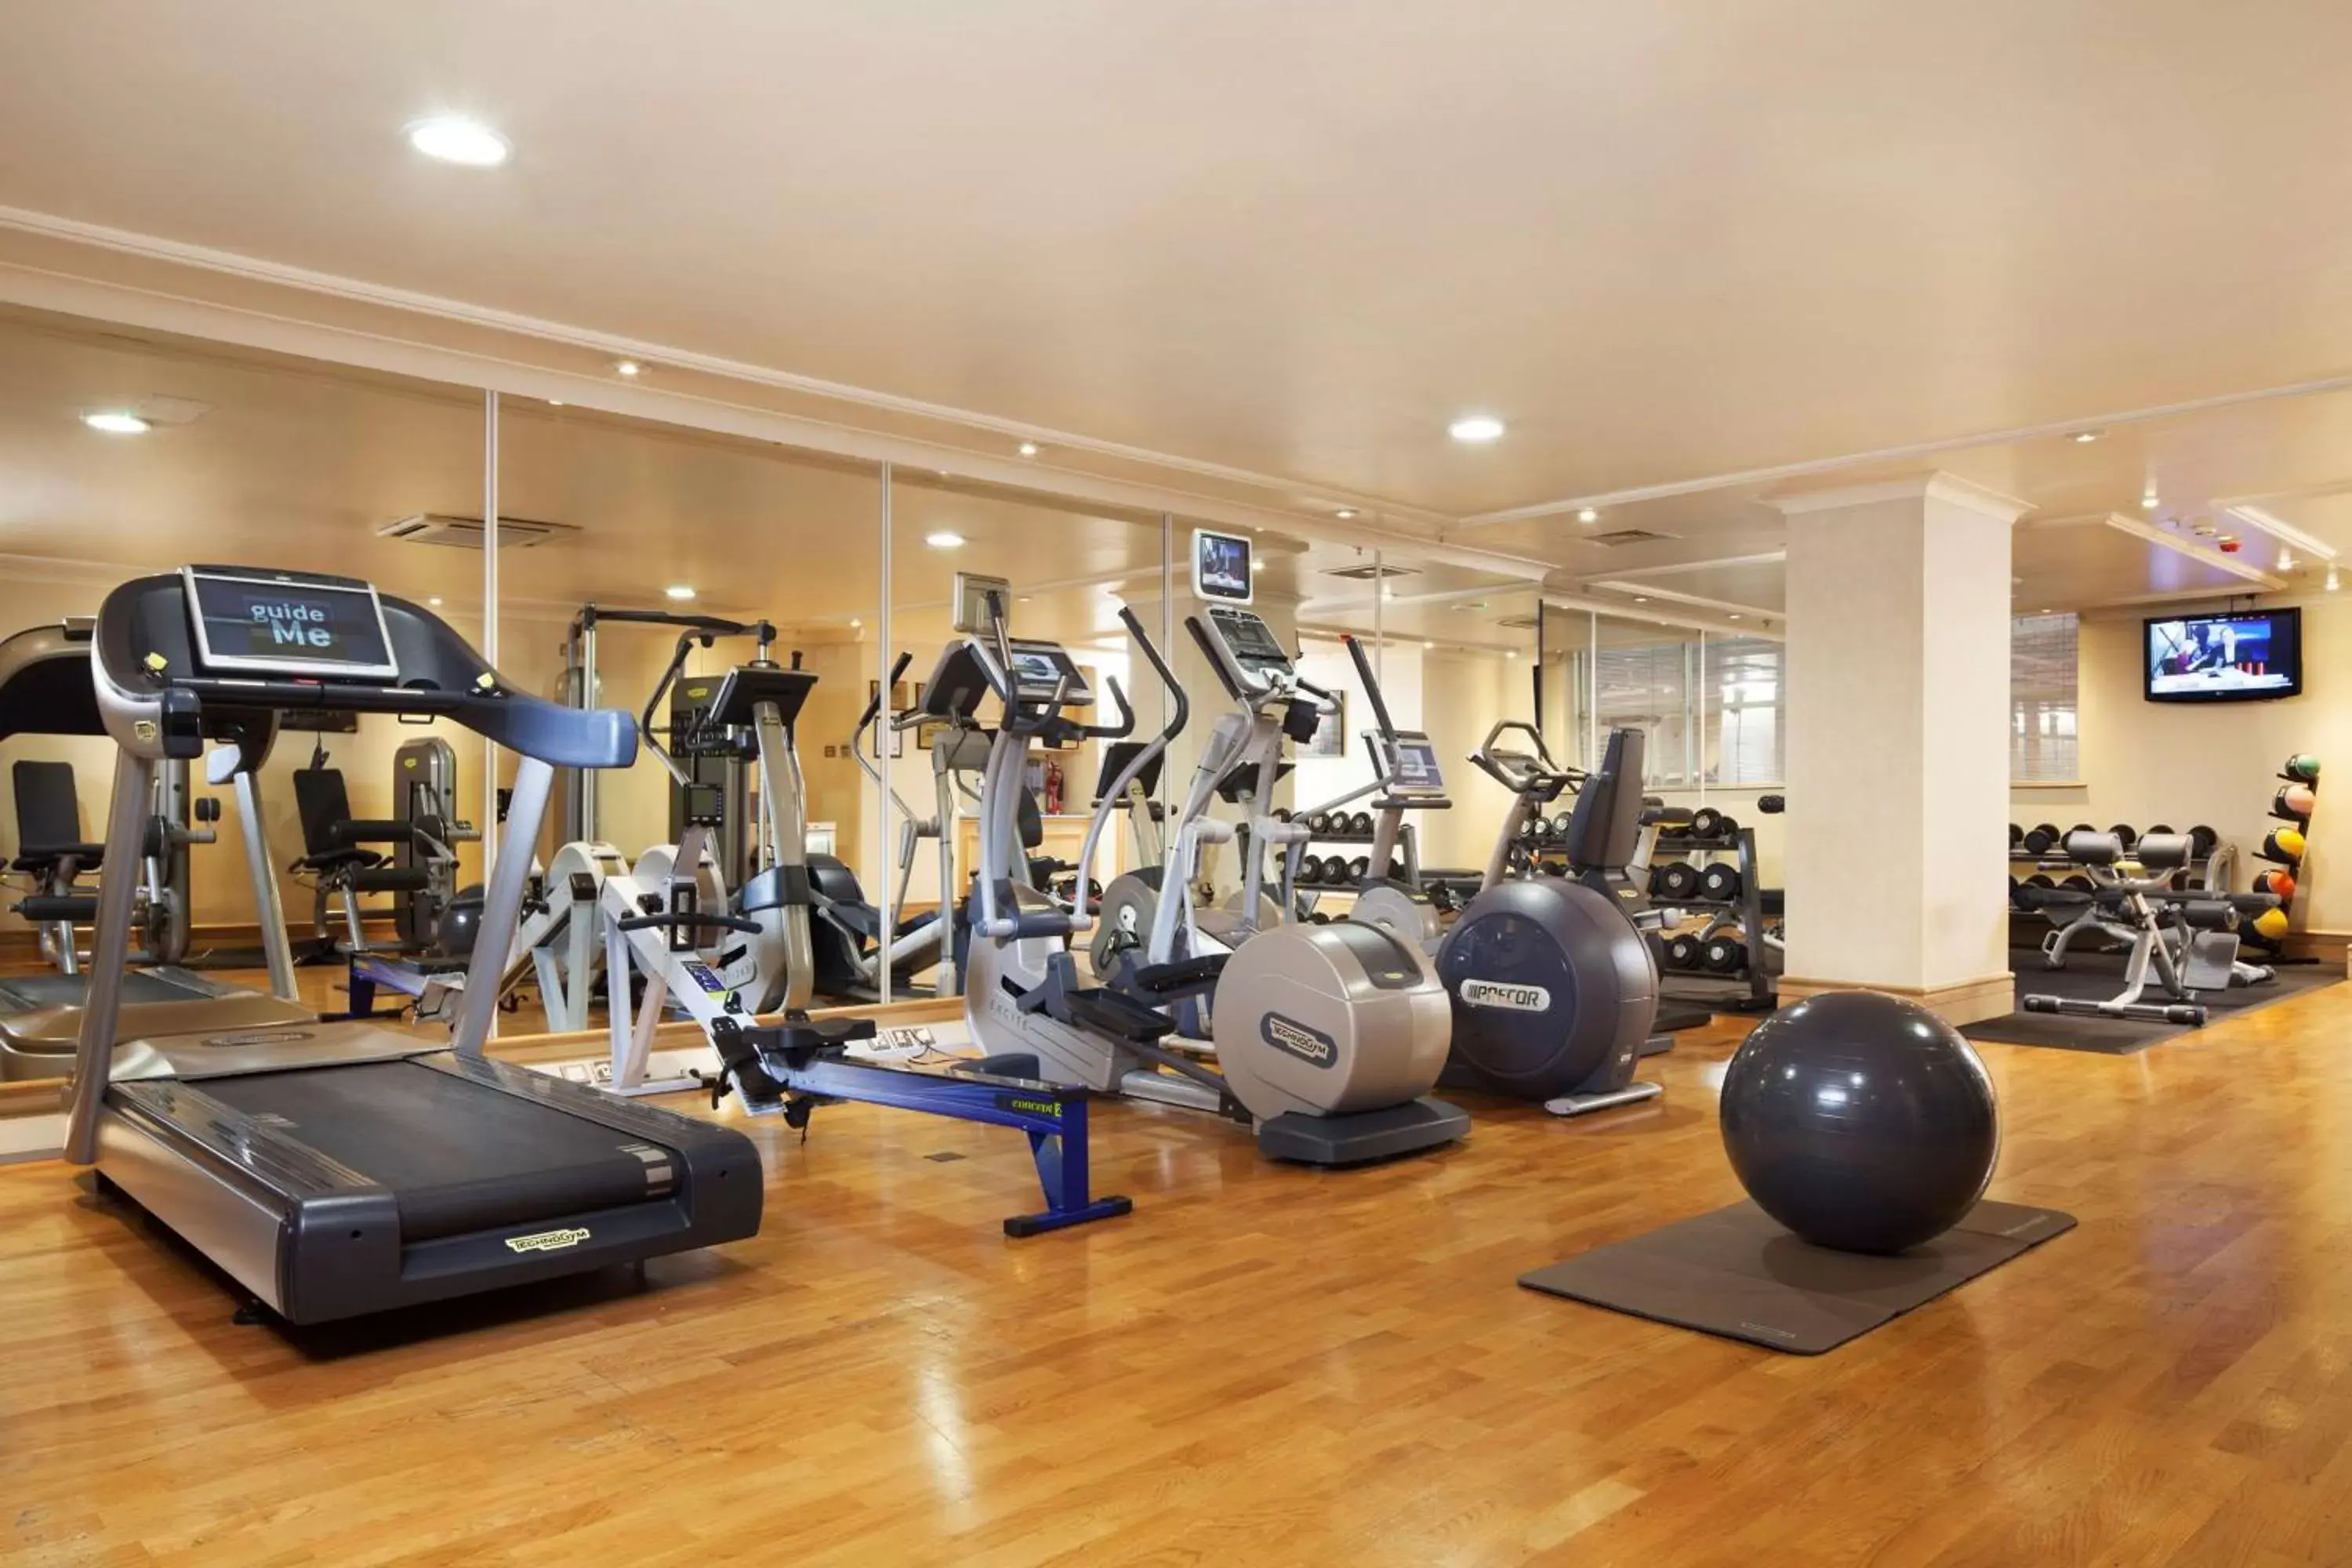 Fitness centre/facilities, Fitness Center/Facilities in Conrad Dublin